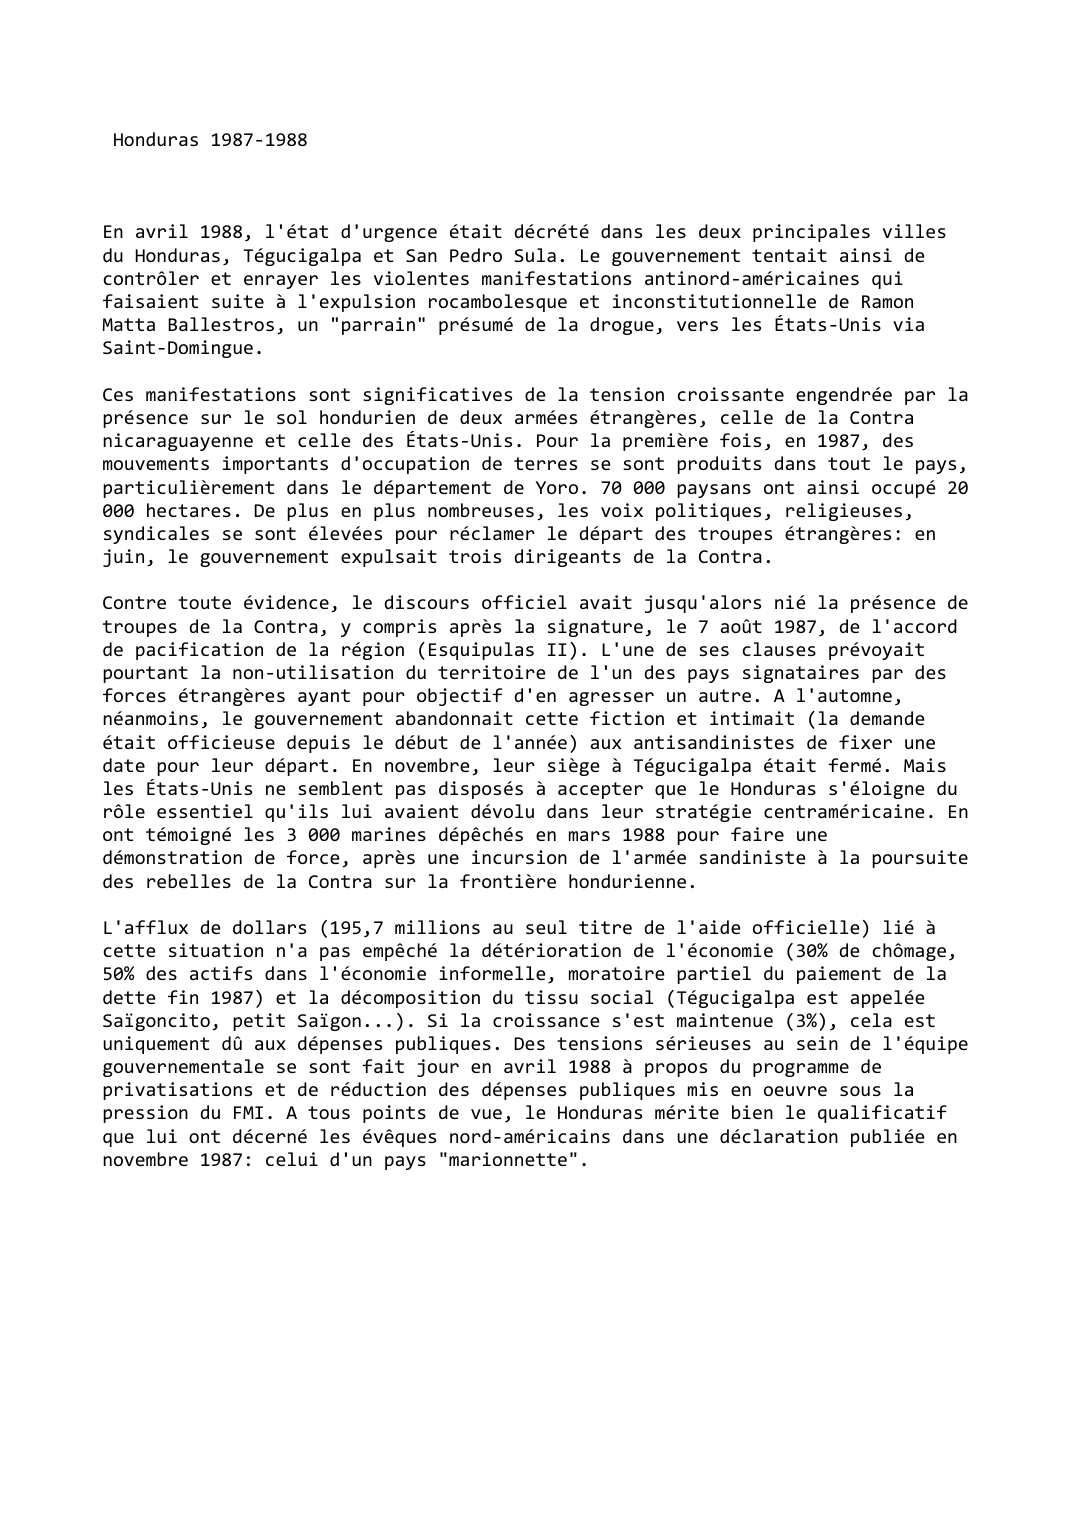 Prévisualisation du document Honduras (1987-1988)